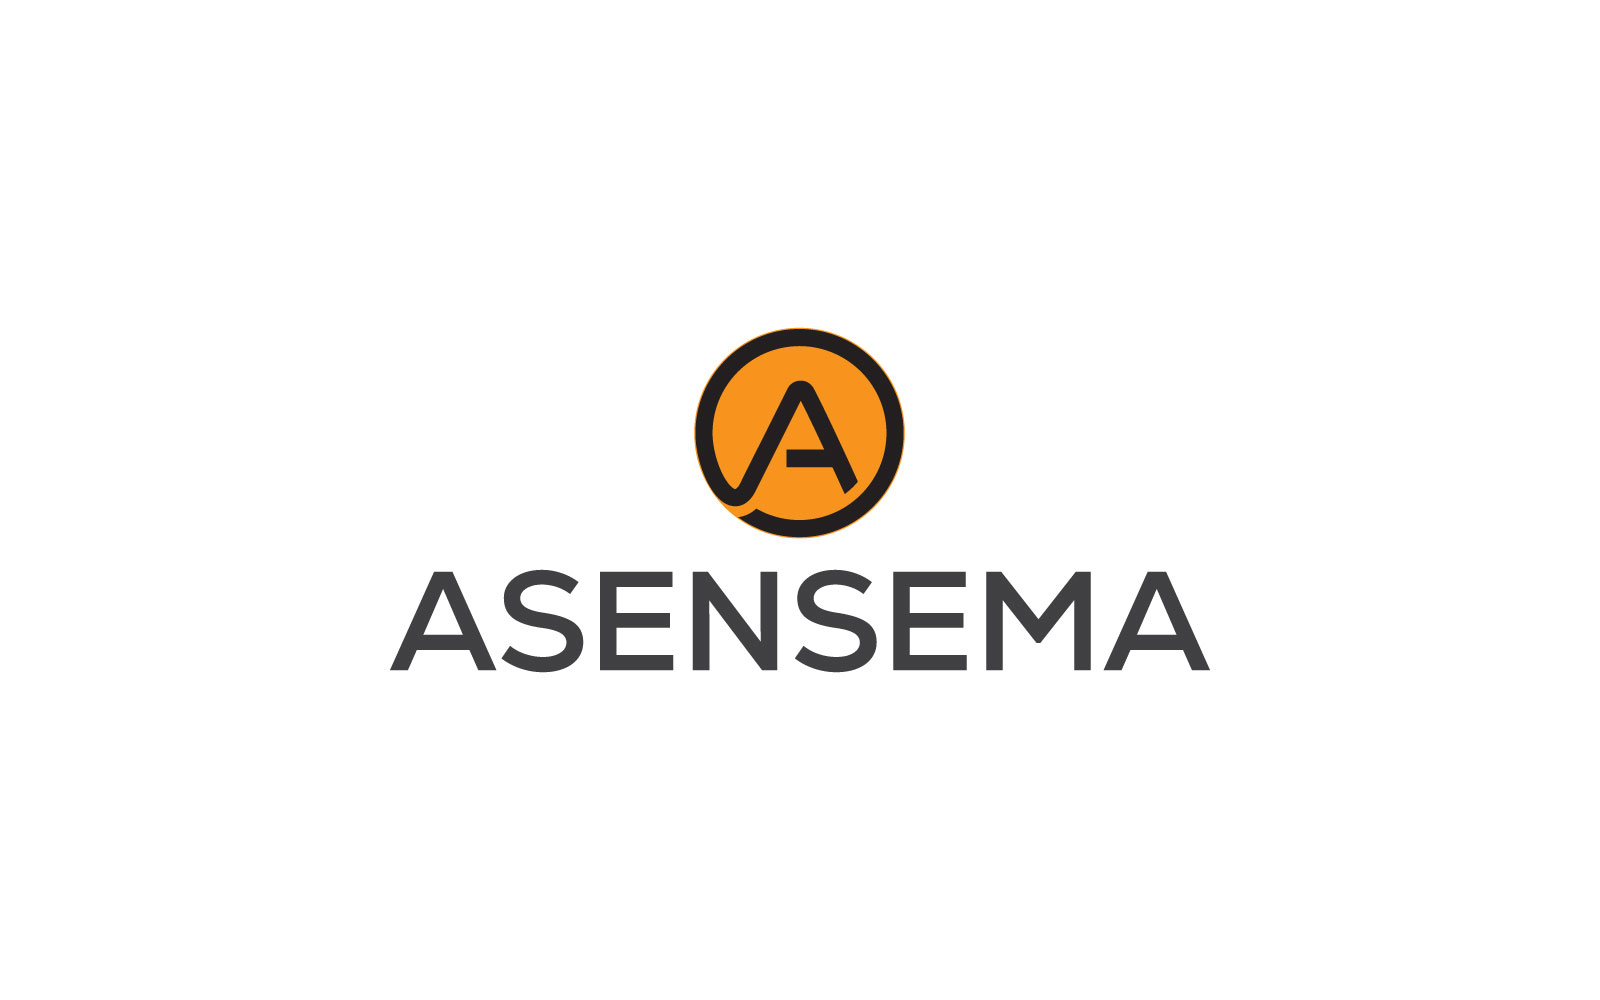 Asensema letter A logo design template